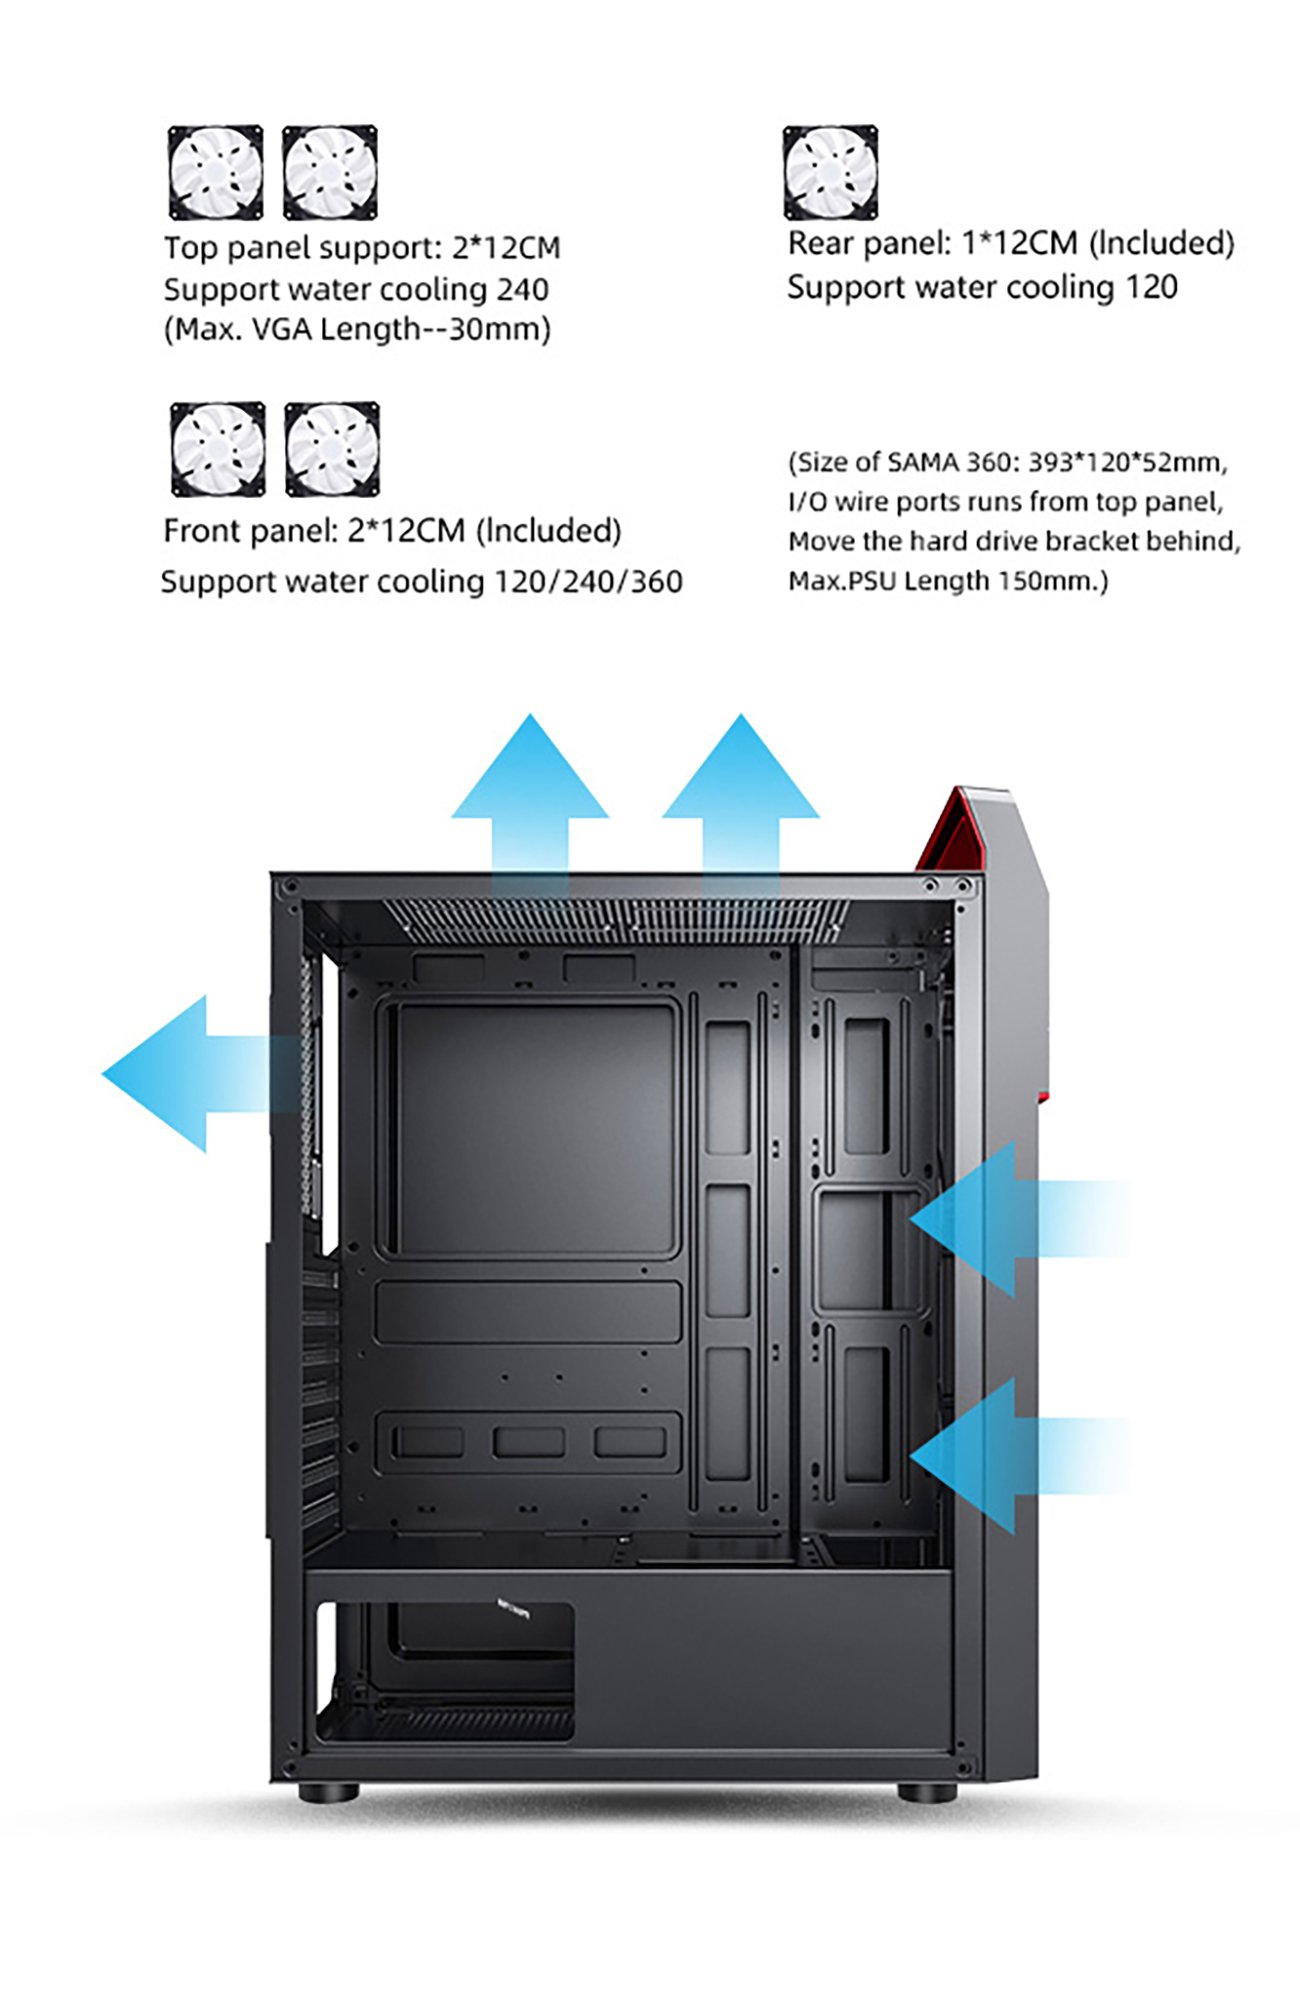 SAMA Sama-S88-BK Black Steel ATX Mid Tower Computer Case